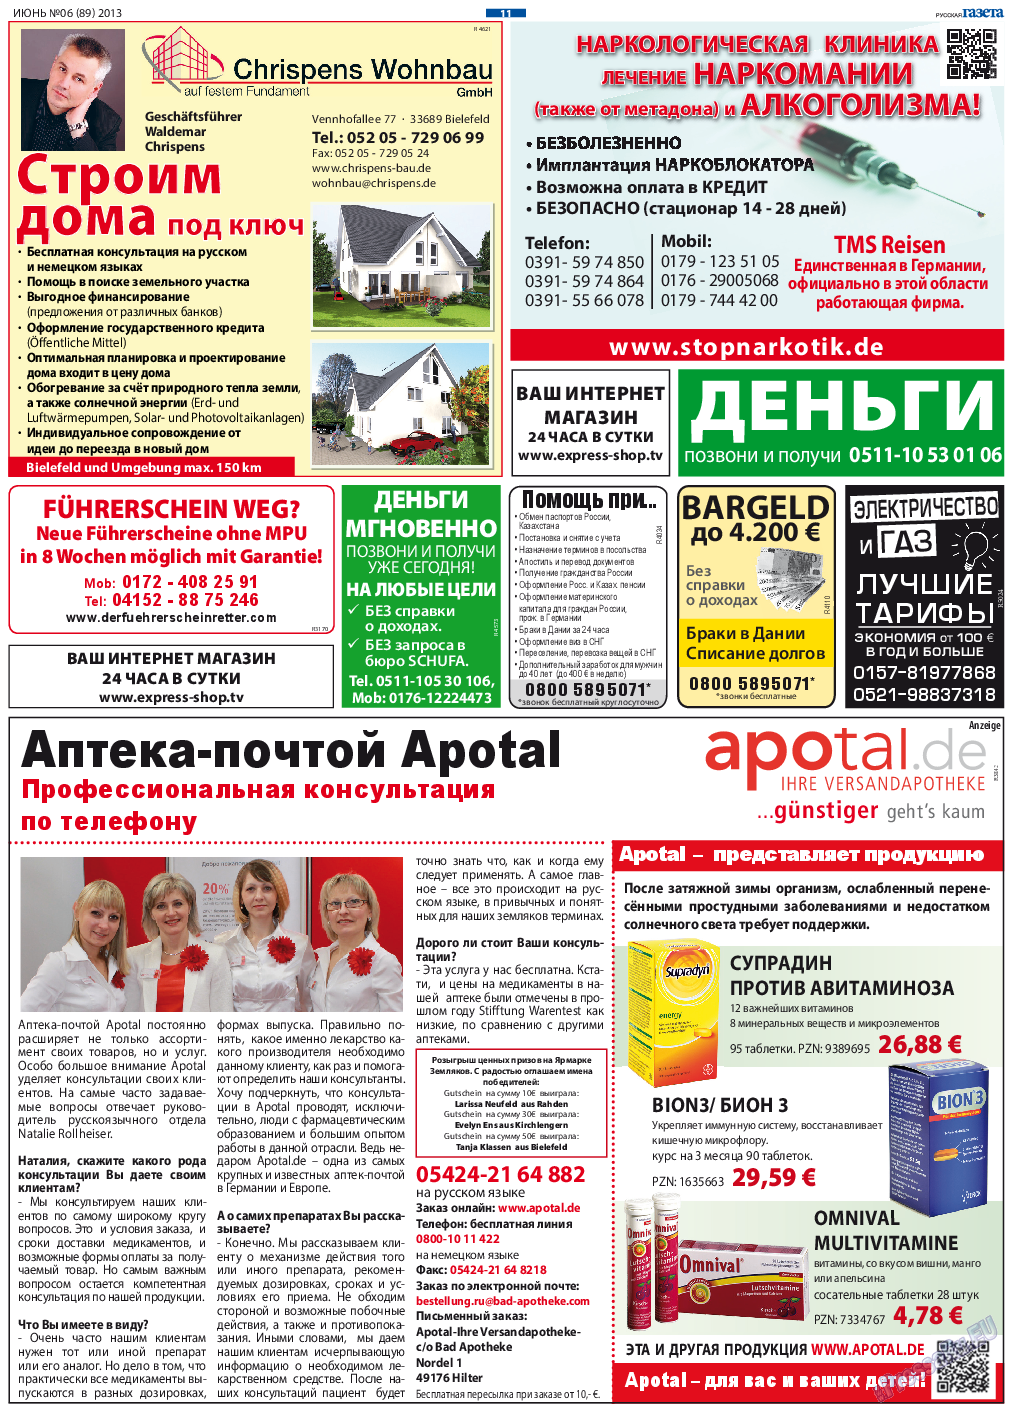 Русская Газета, газета. 2013 №6 стр.11